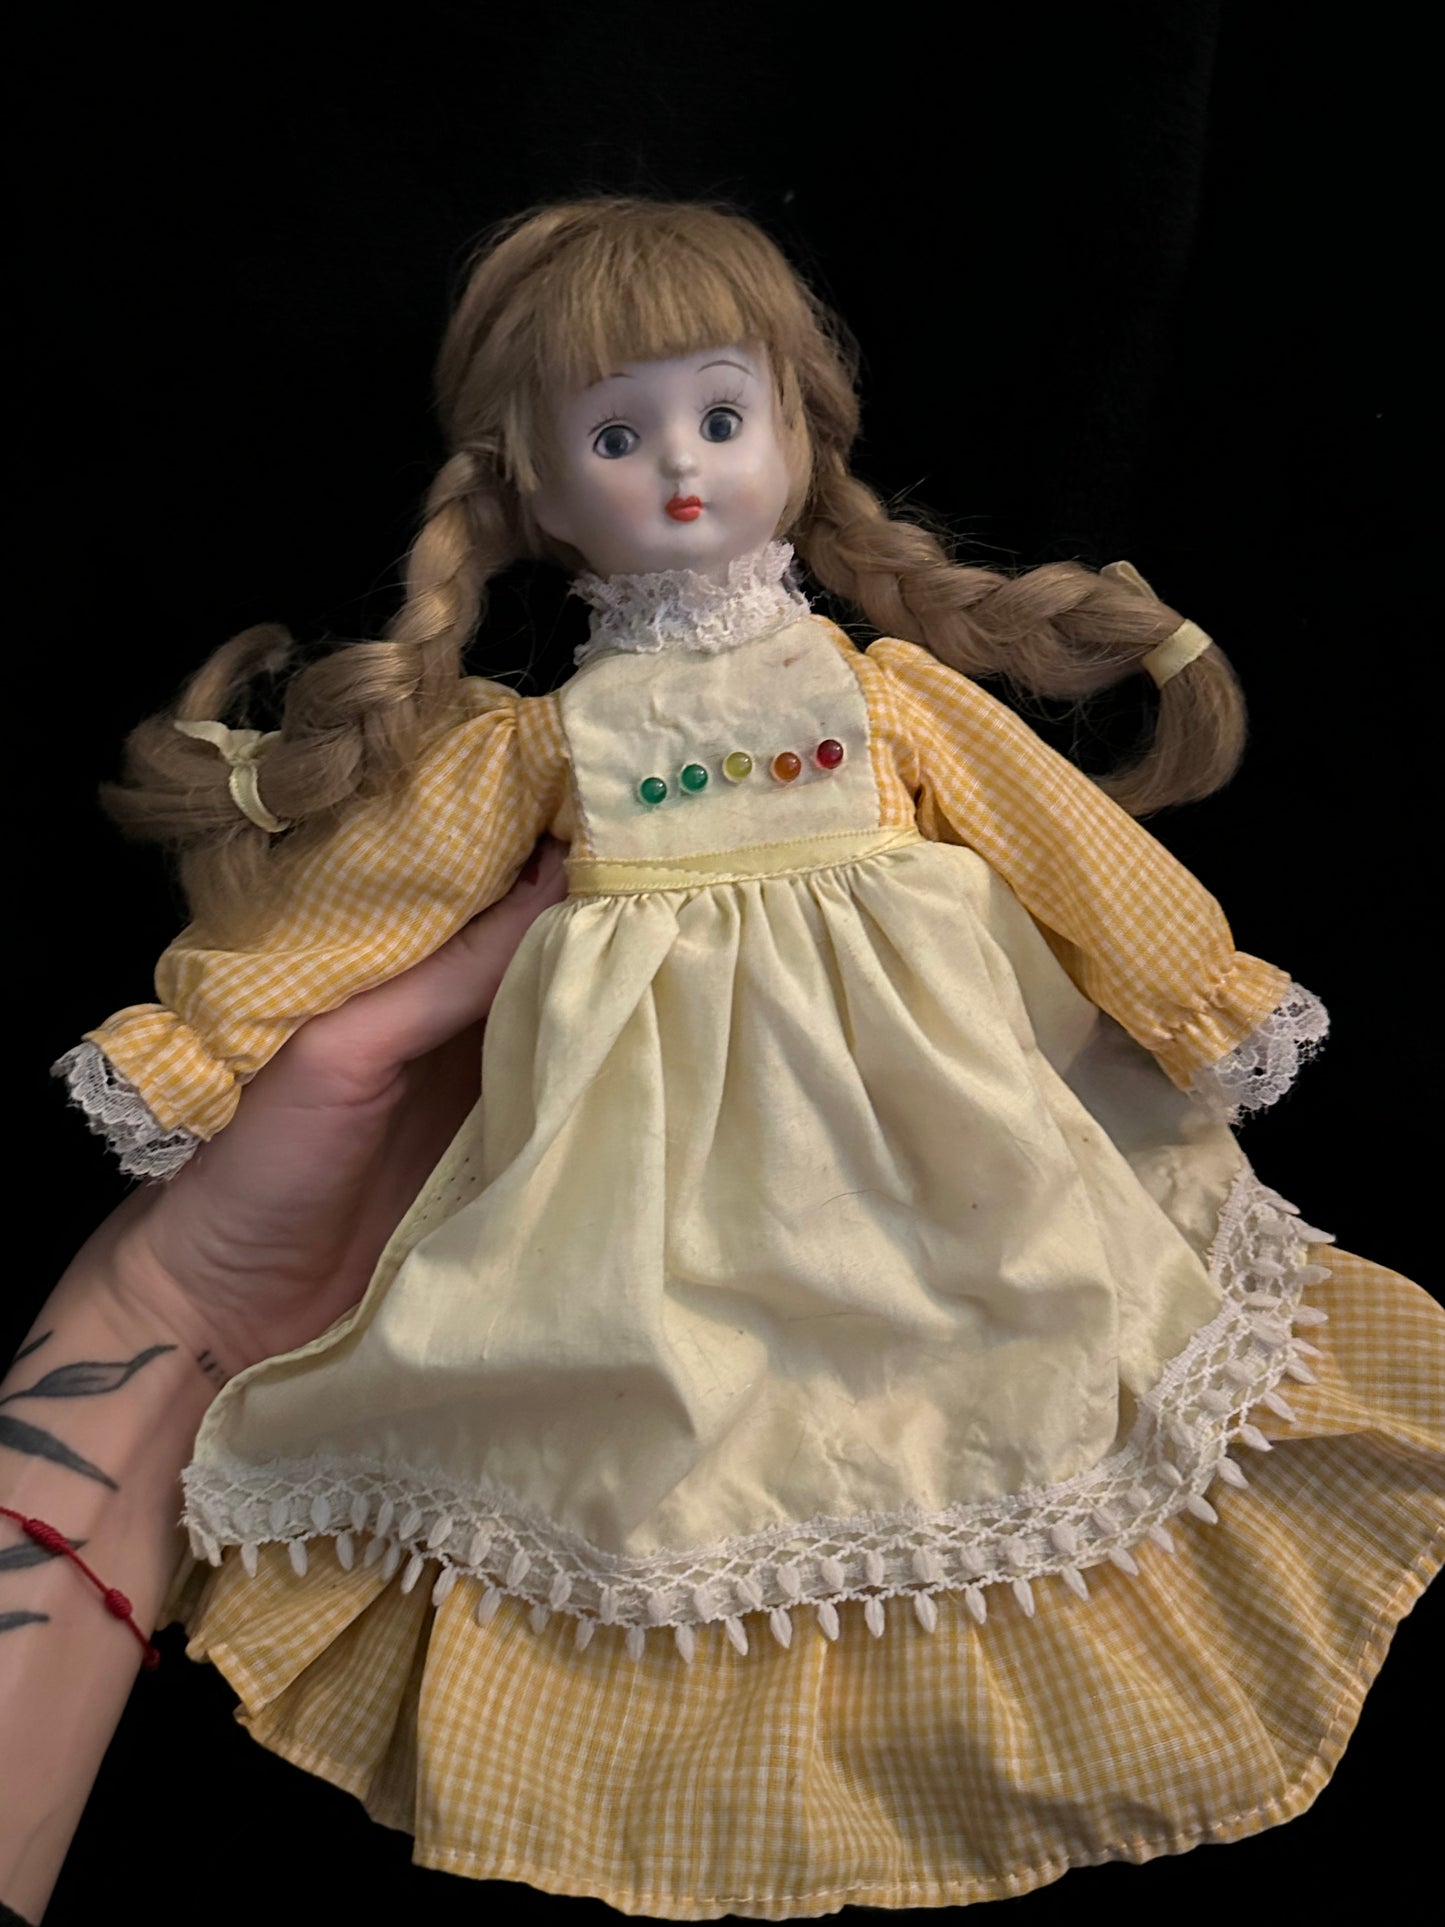 Possibly Haunted EMF detector Doll